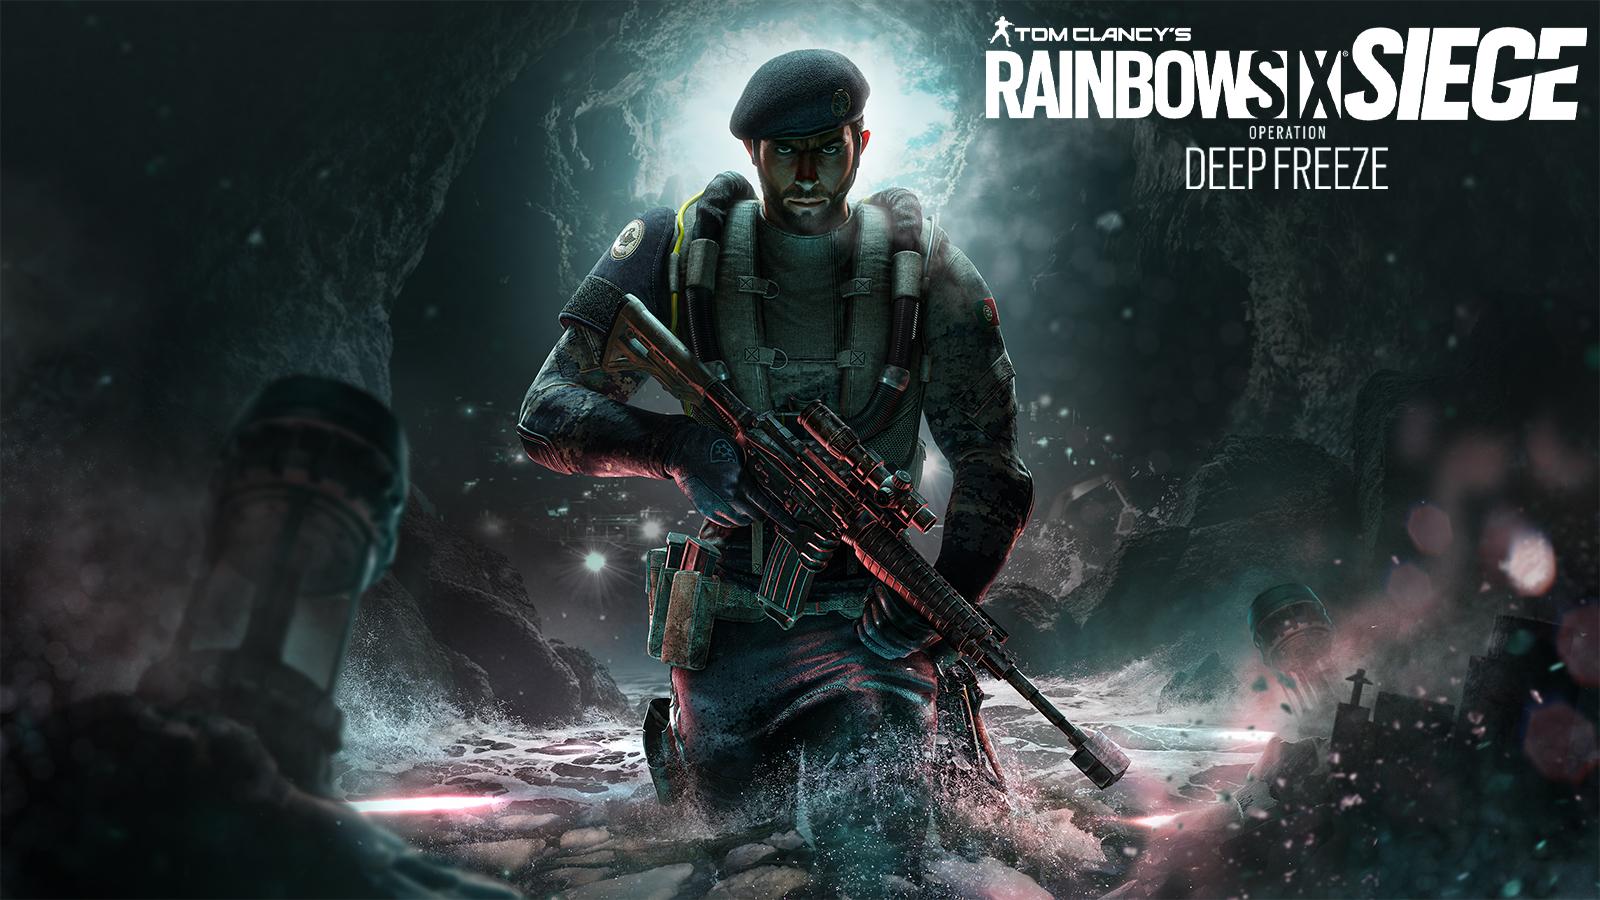 an image of Tubarao in Rainbow Six Siege Operation Deep Freeze